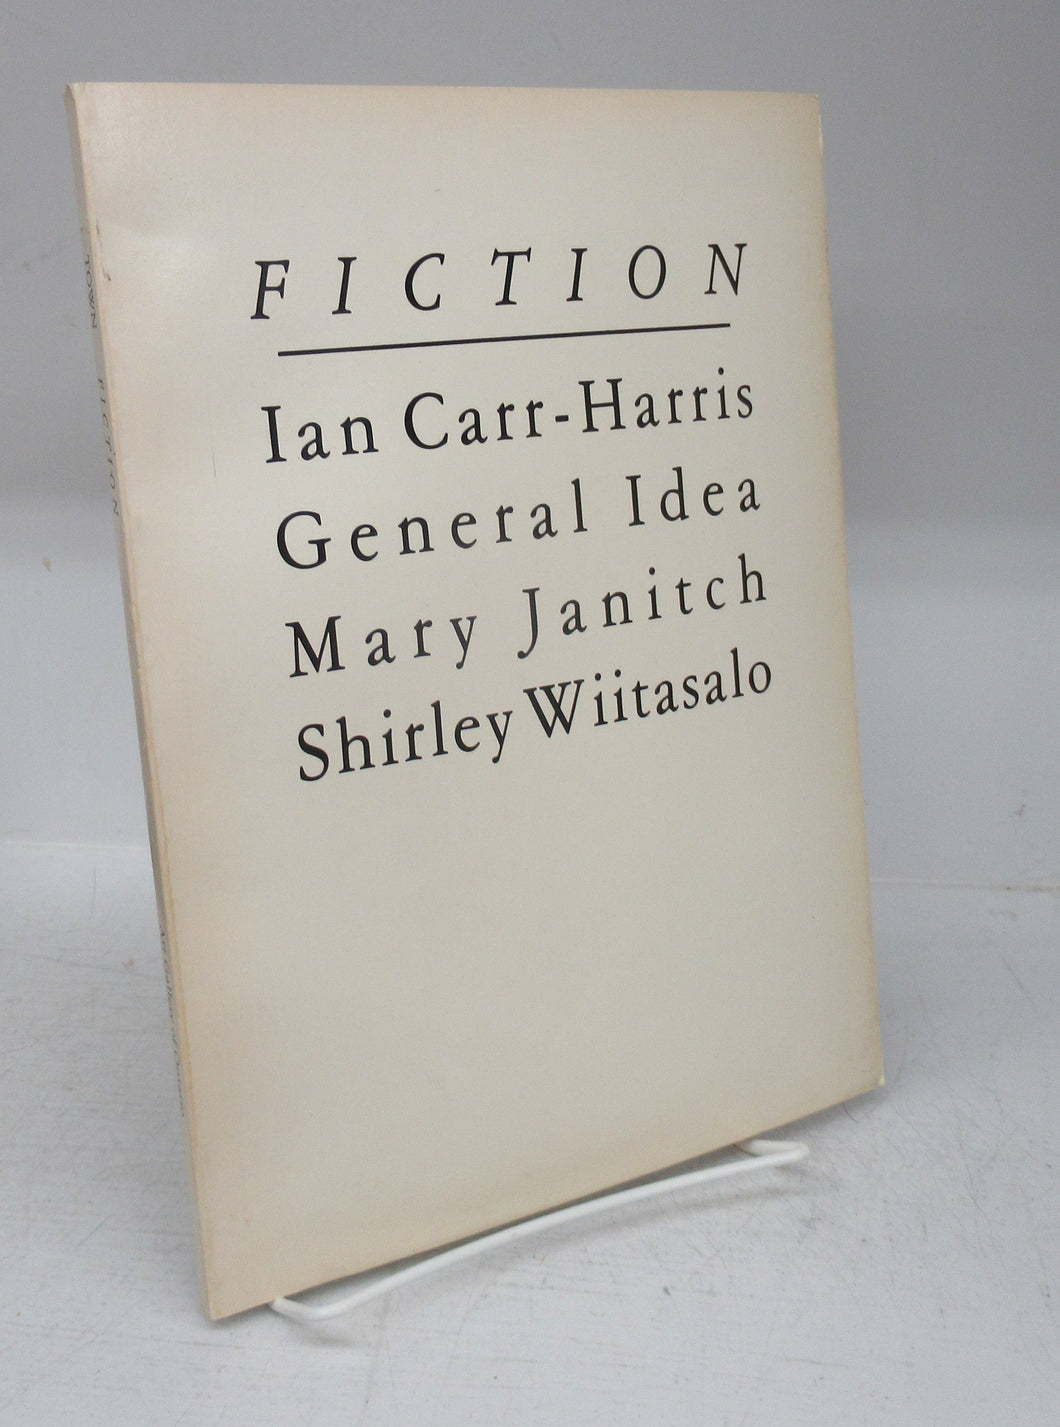 Fiction: Ian Carr-Harris, General Idea, Mary Janitch, Shirley Wiitasalo